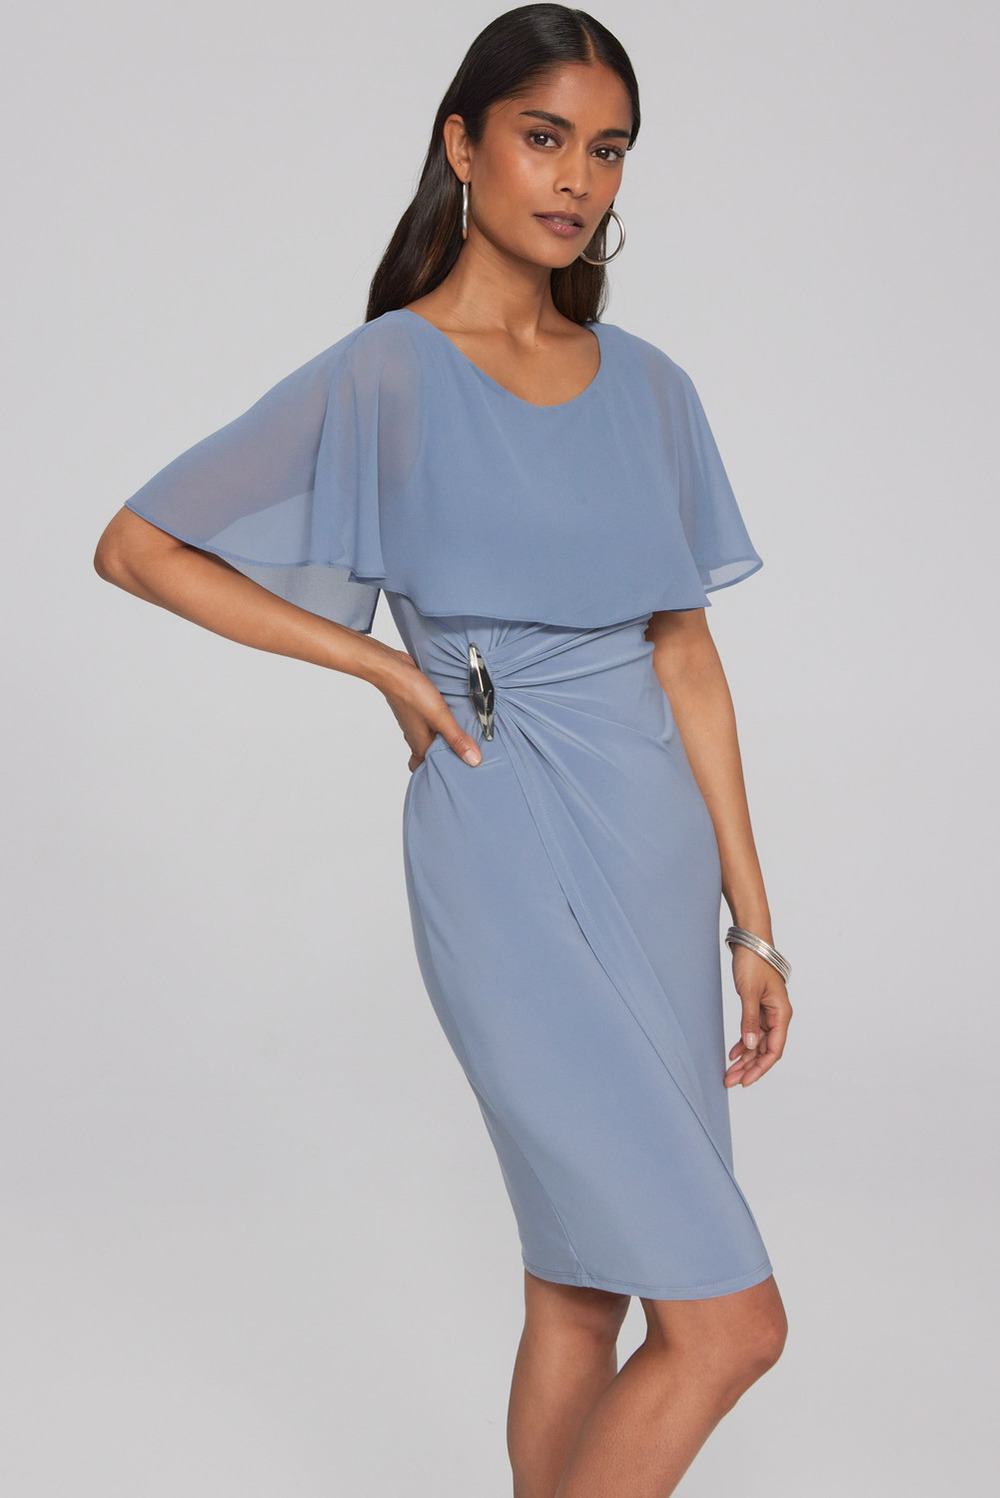 Embellished Trim Sheer Cape Dress Style 241708. Serenity Blue